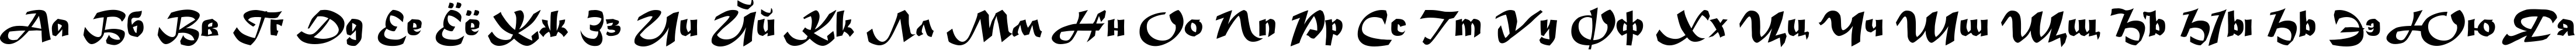 Пример написания русского алфавита шрифтом Madera TYGRA